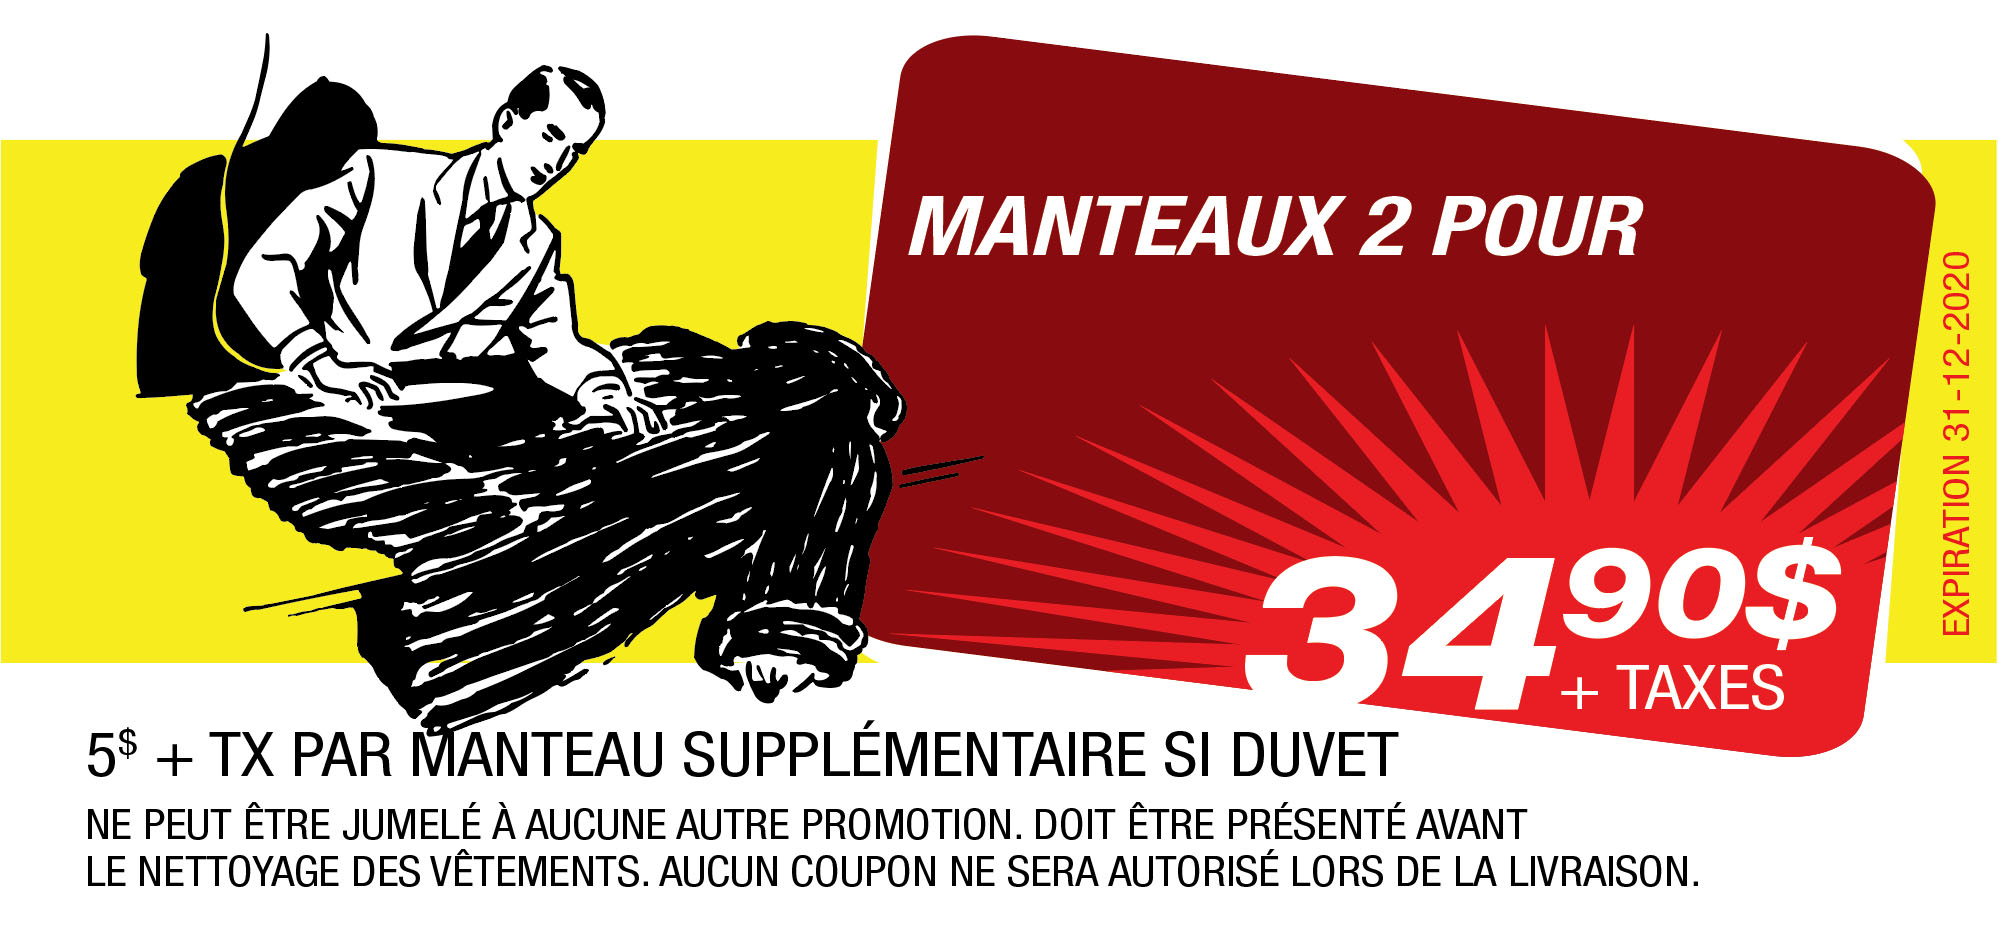 NettoyeurEclair-Manteaux-Expiration31082018